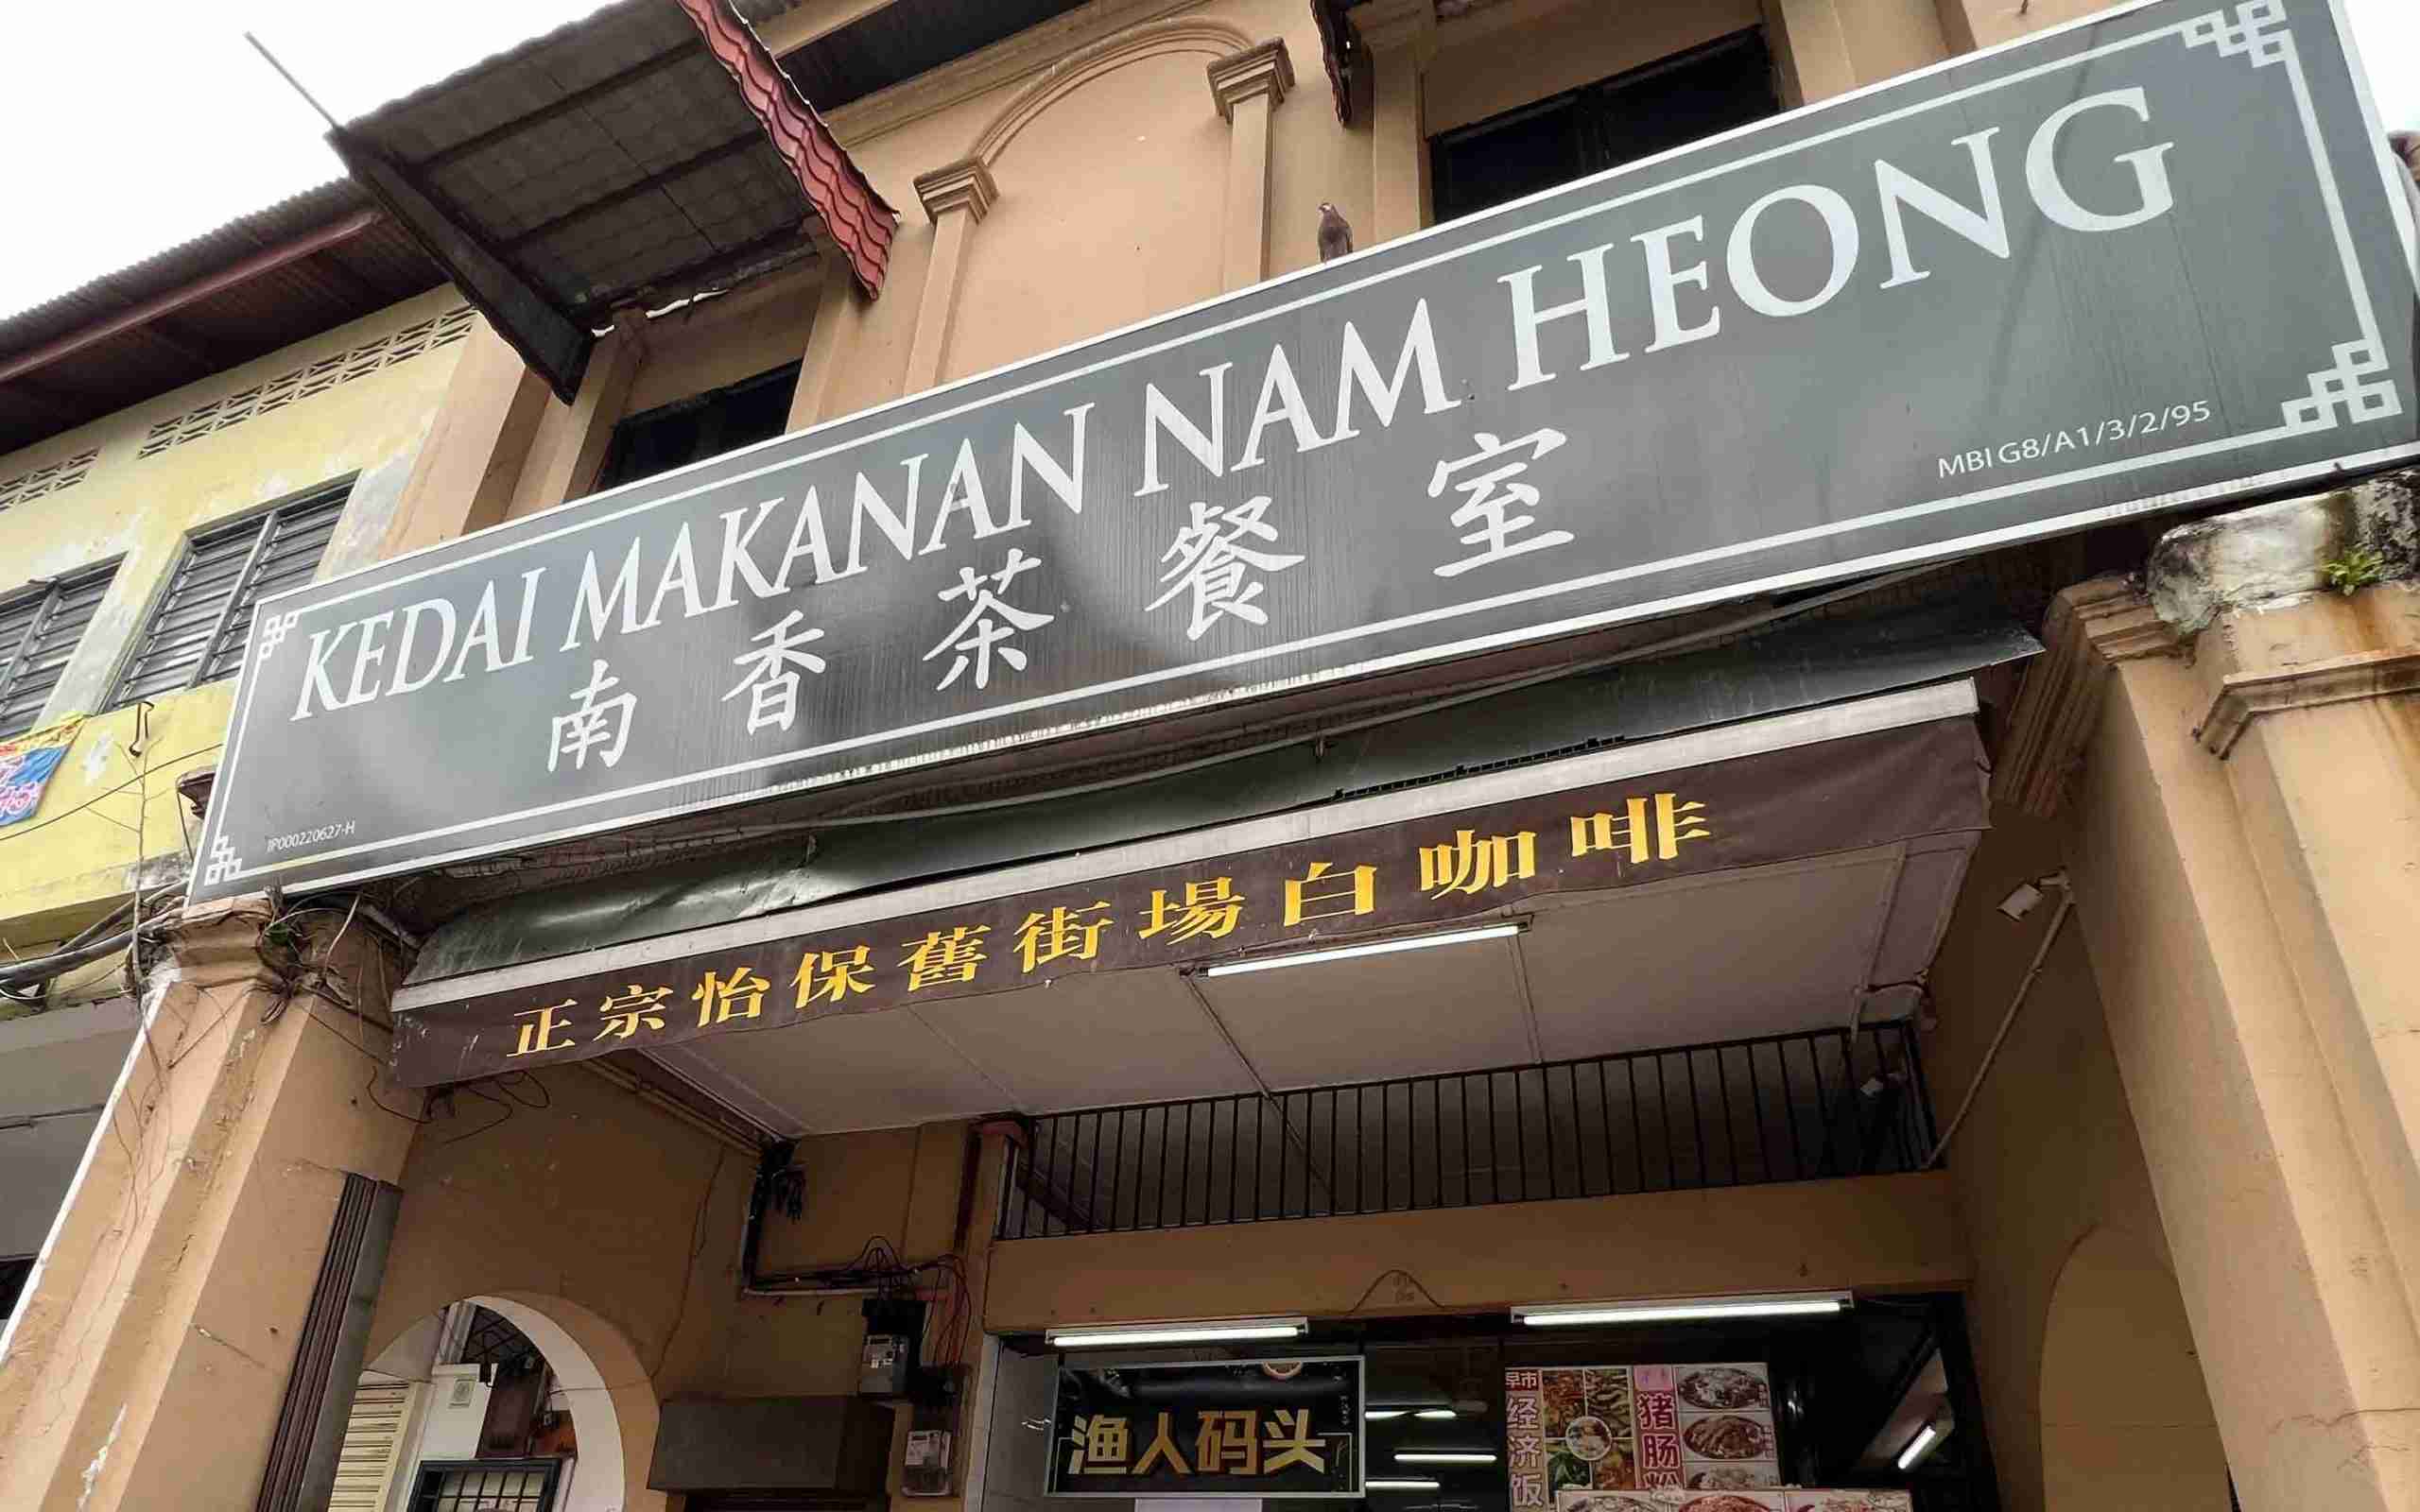 Kedai Makanan Nam Heong – Ipoh Itinerary